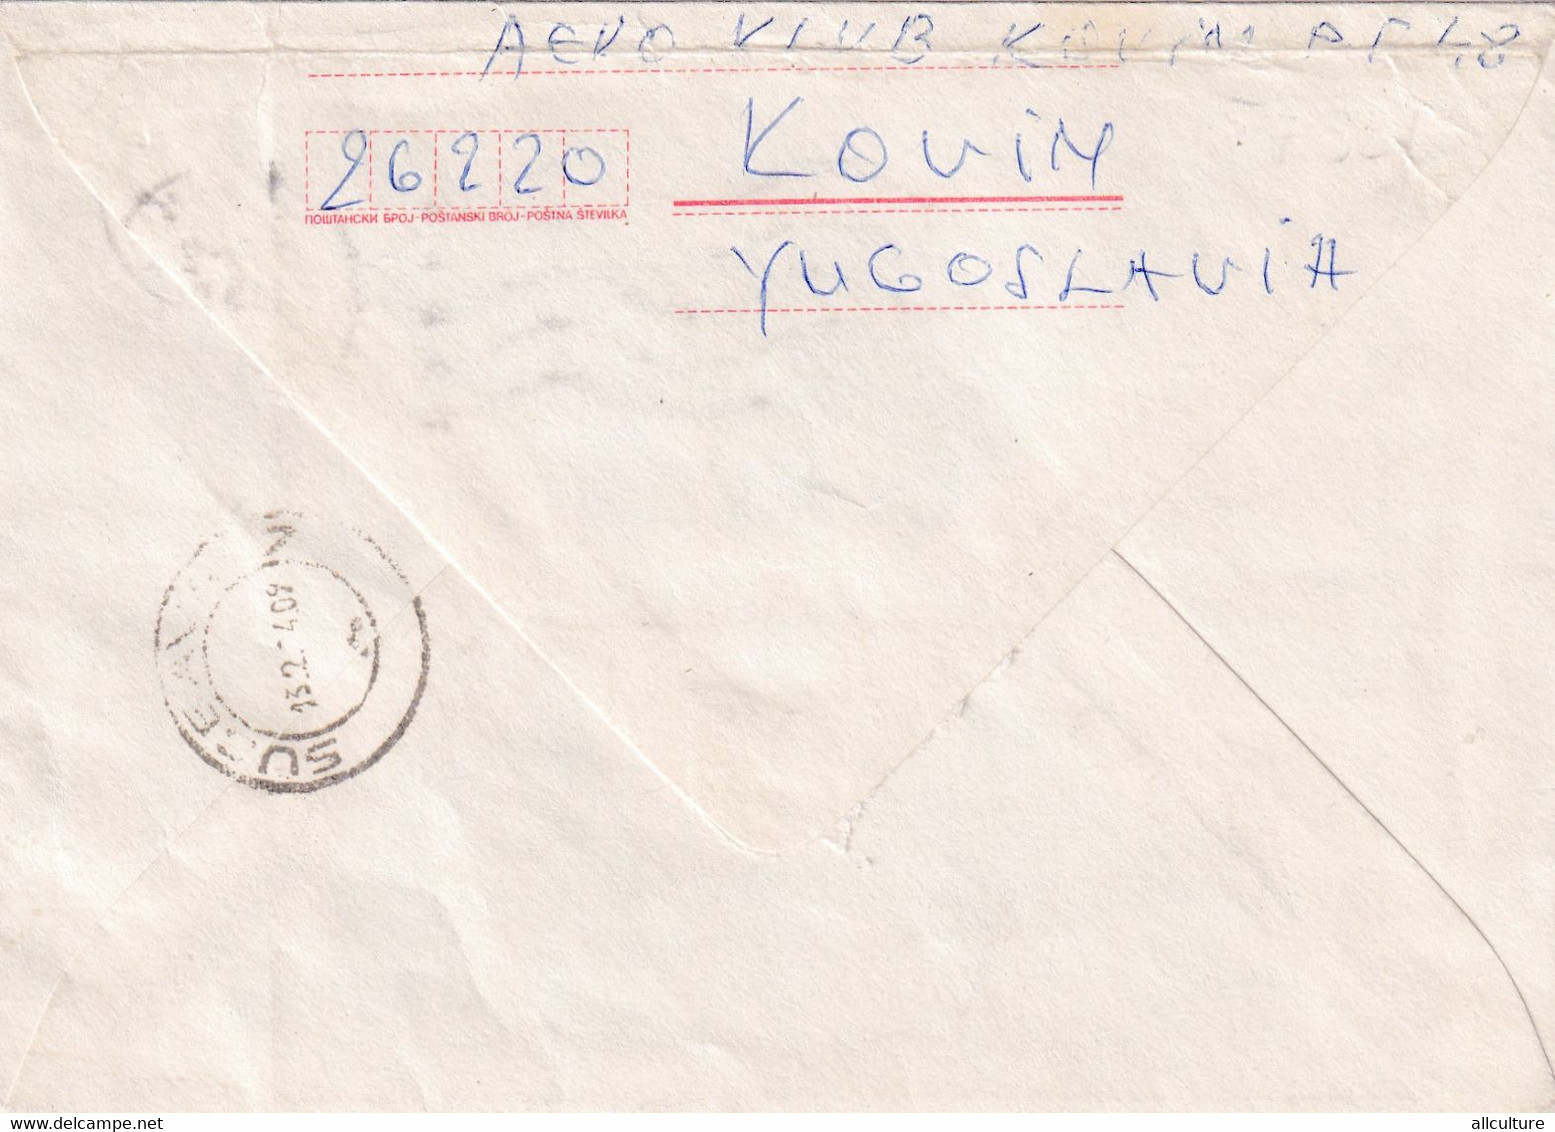 A2809-  Cover From Kovin 1984 Jugoslavia Slovakia , Postal Stationery To Suceava Romania 1984 - Enveloppes